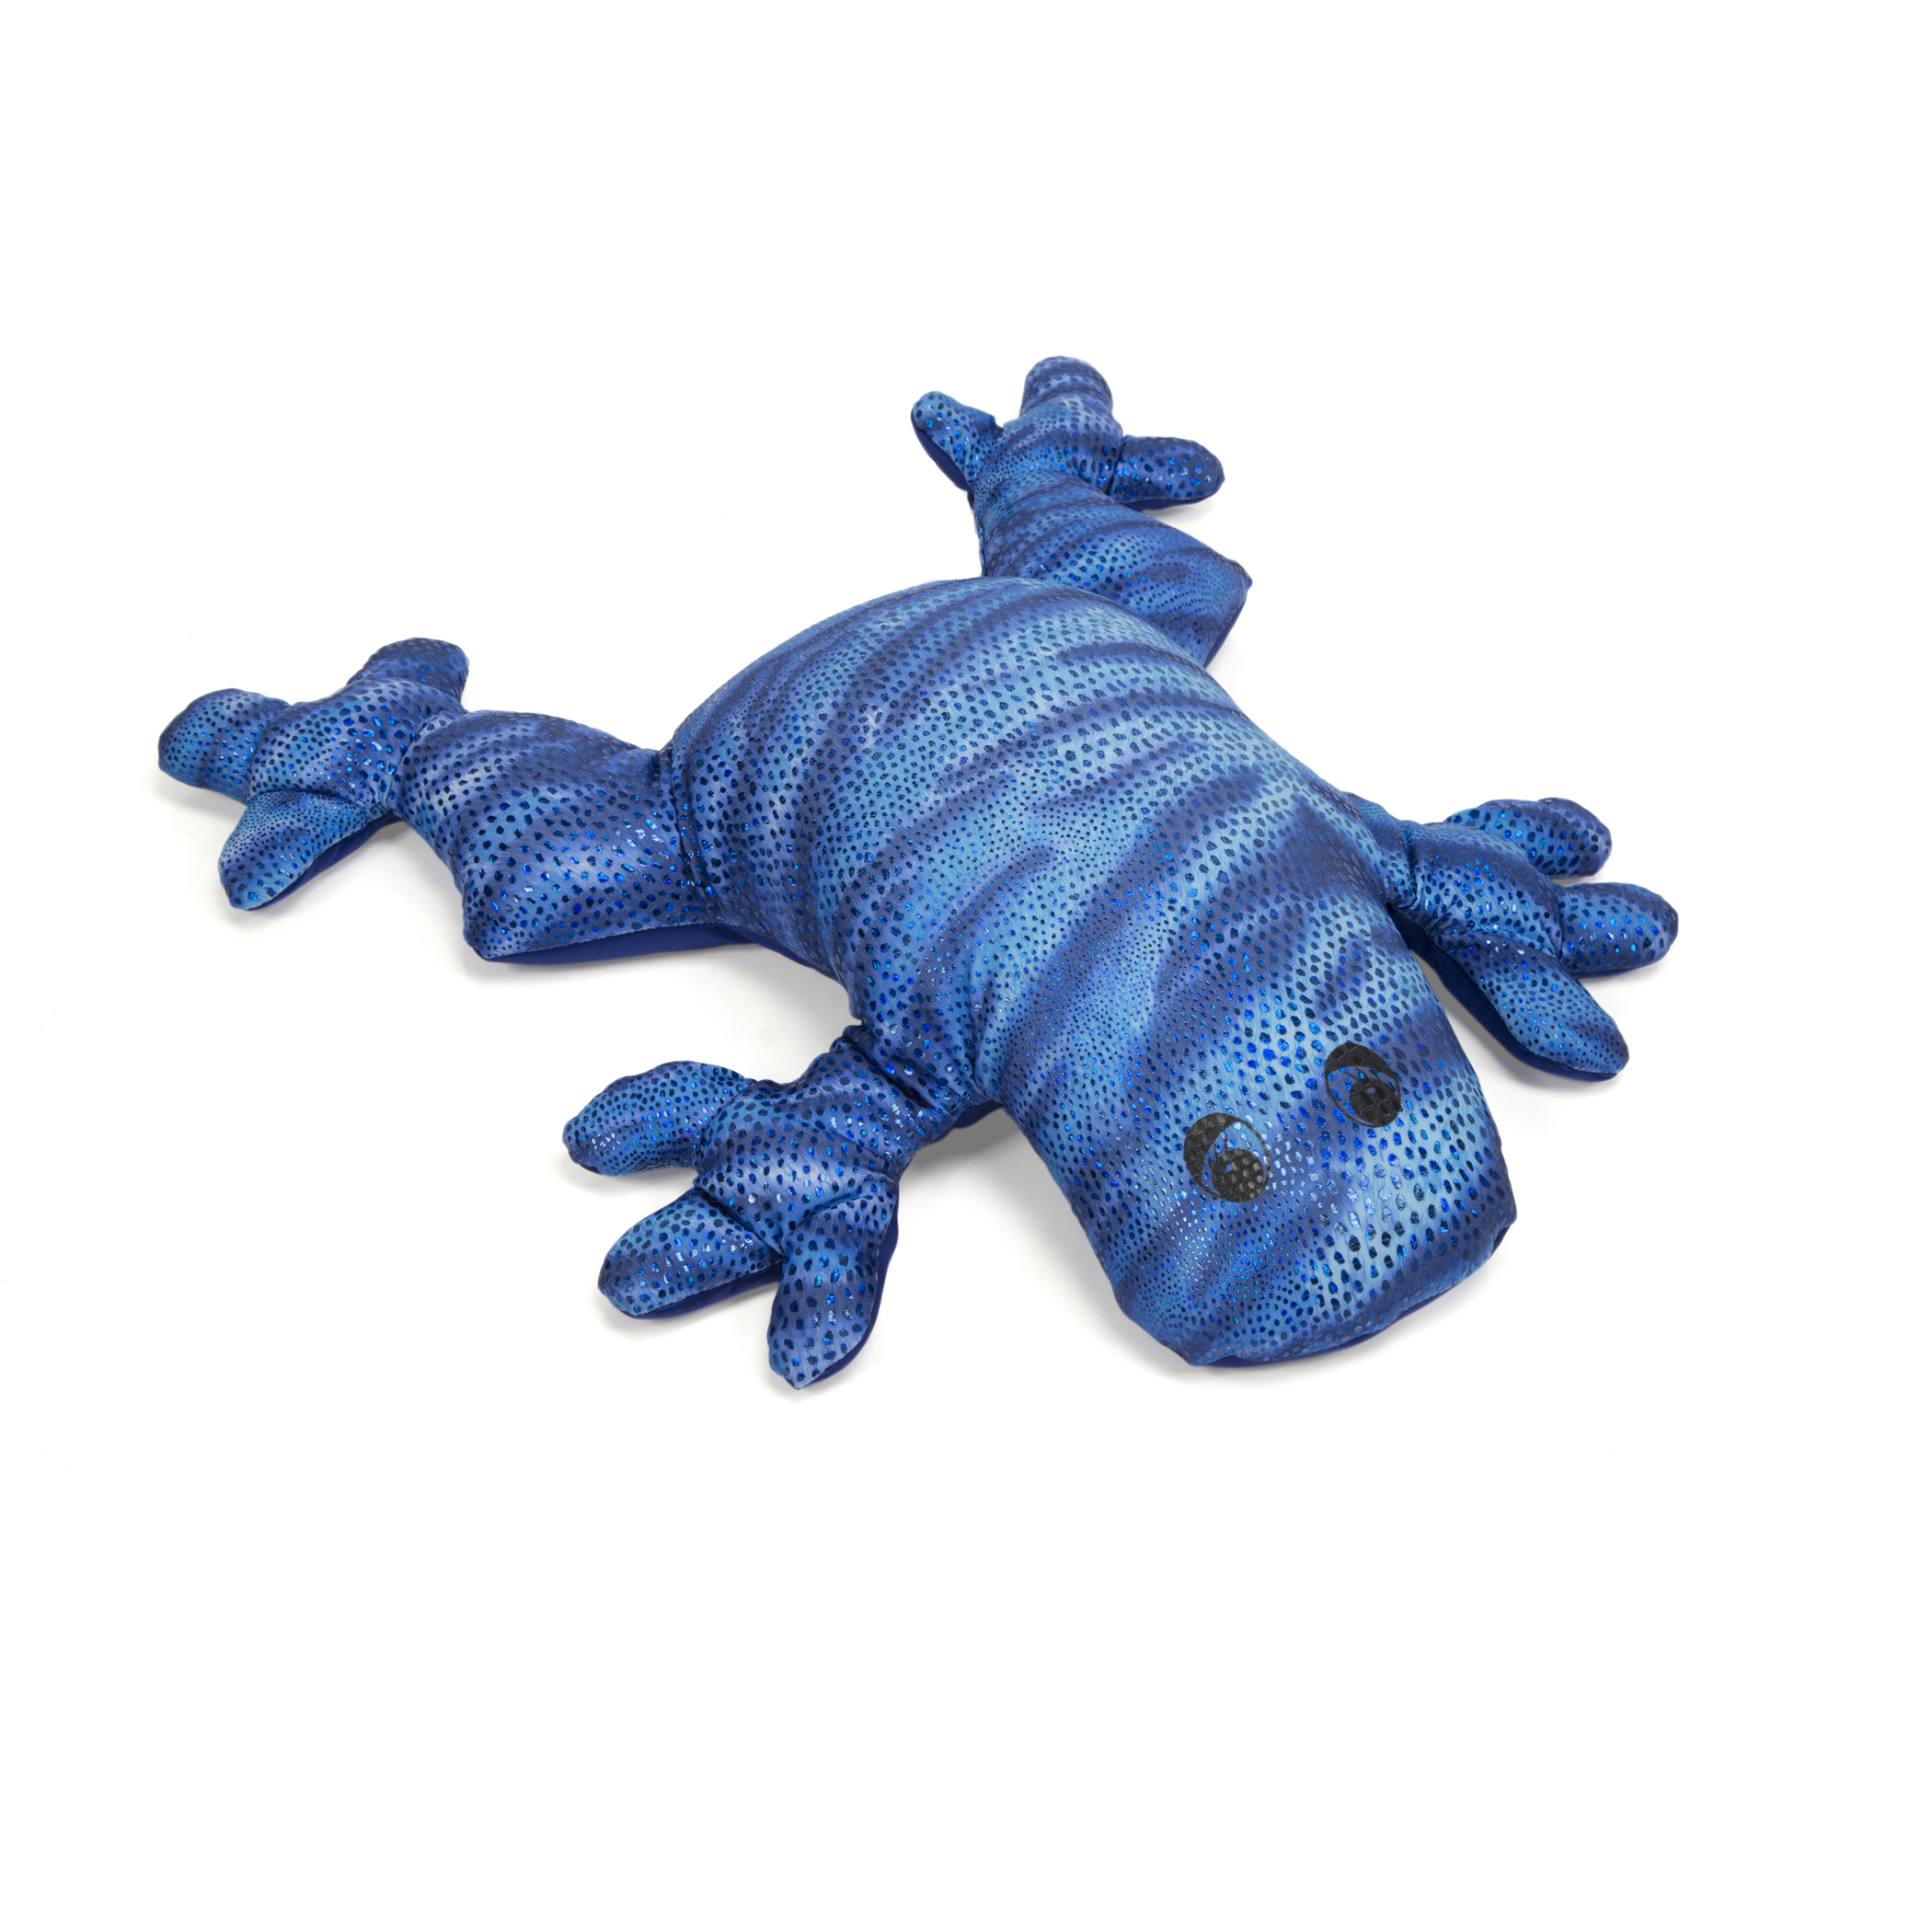 manimo manimo - Frog Blue 2.5 kg